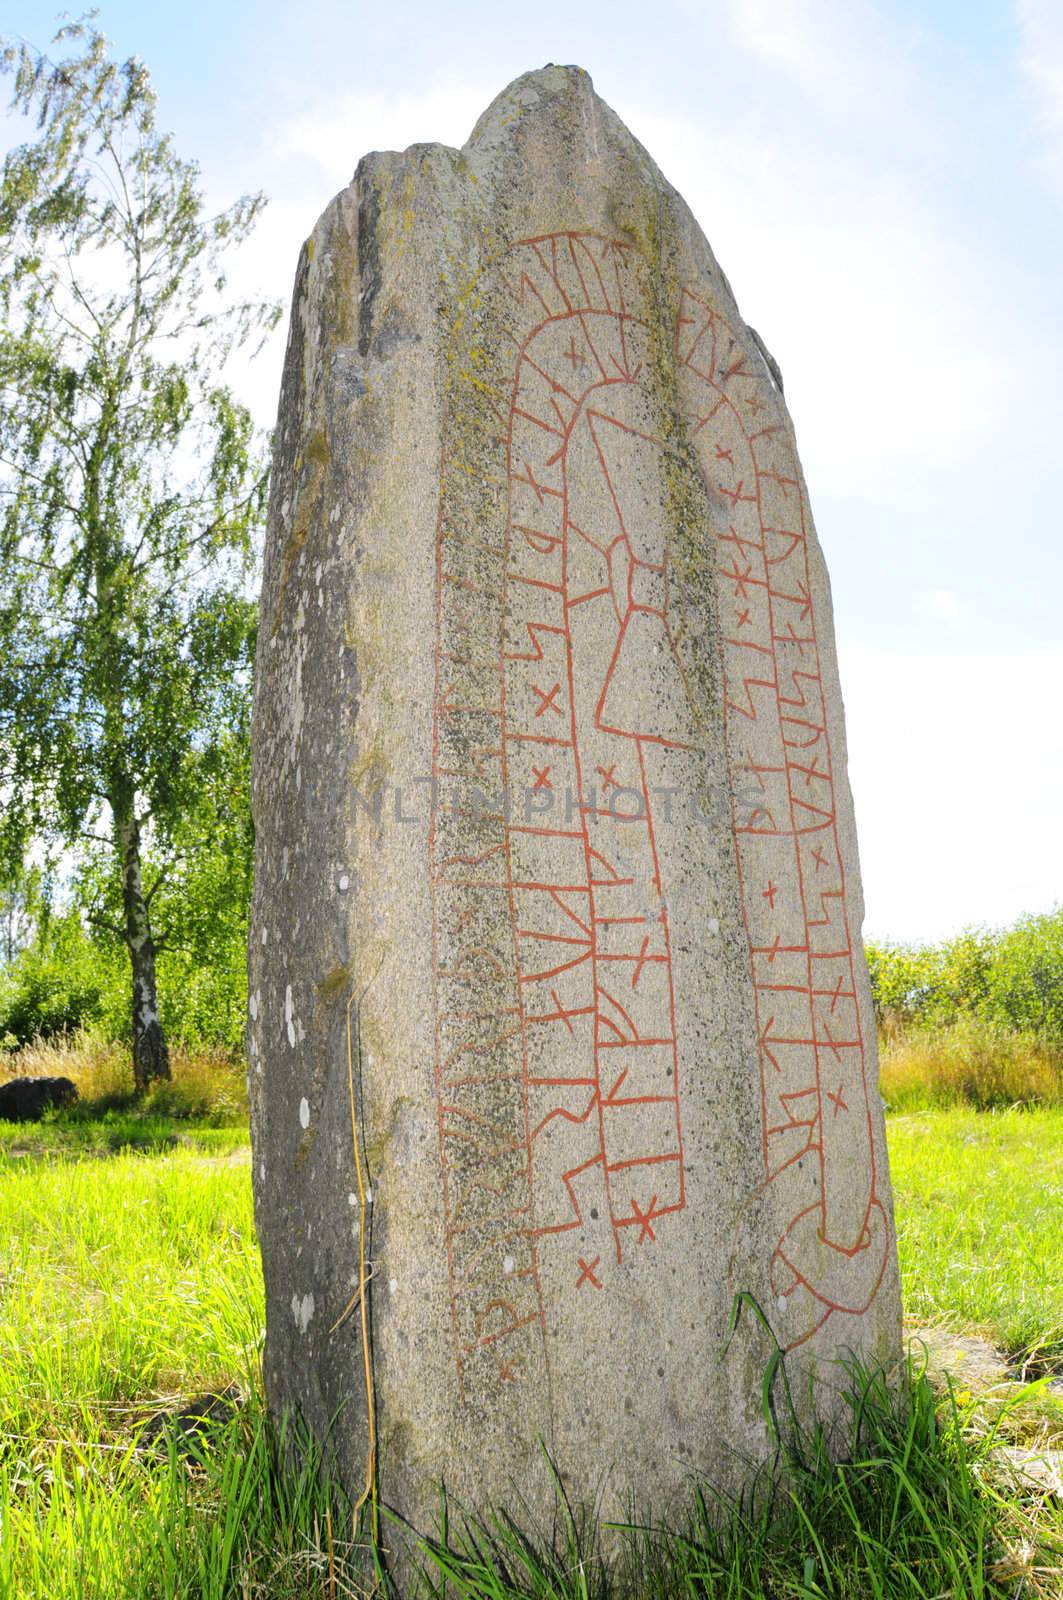 ancient rune stone in Sweden